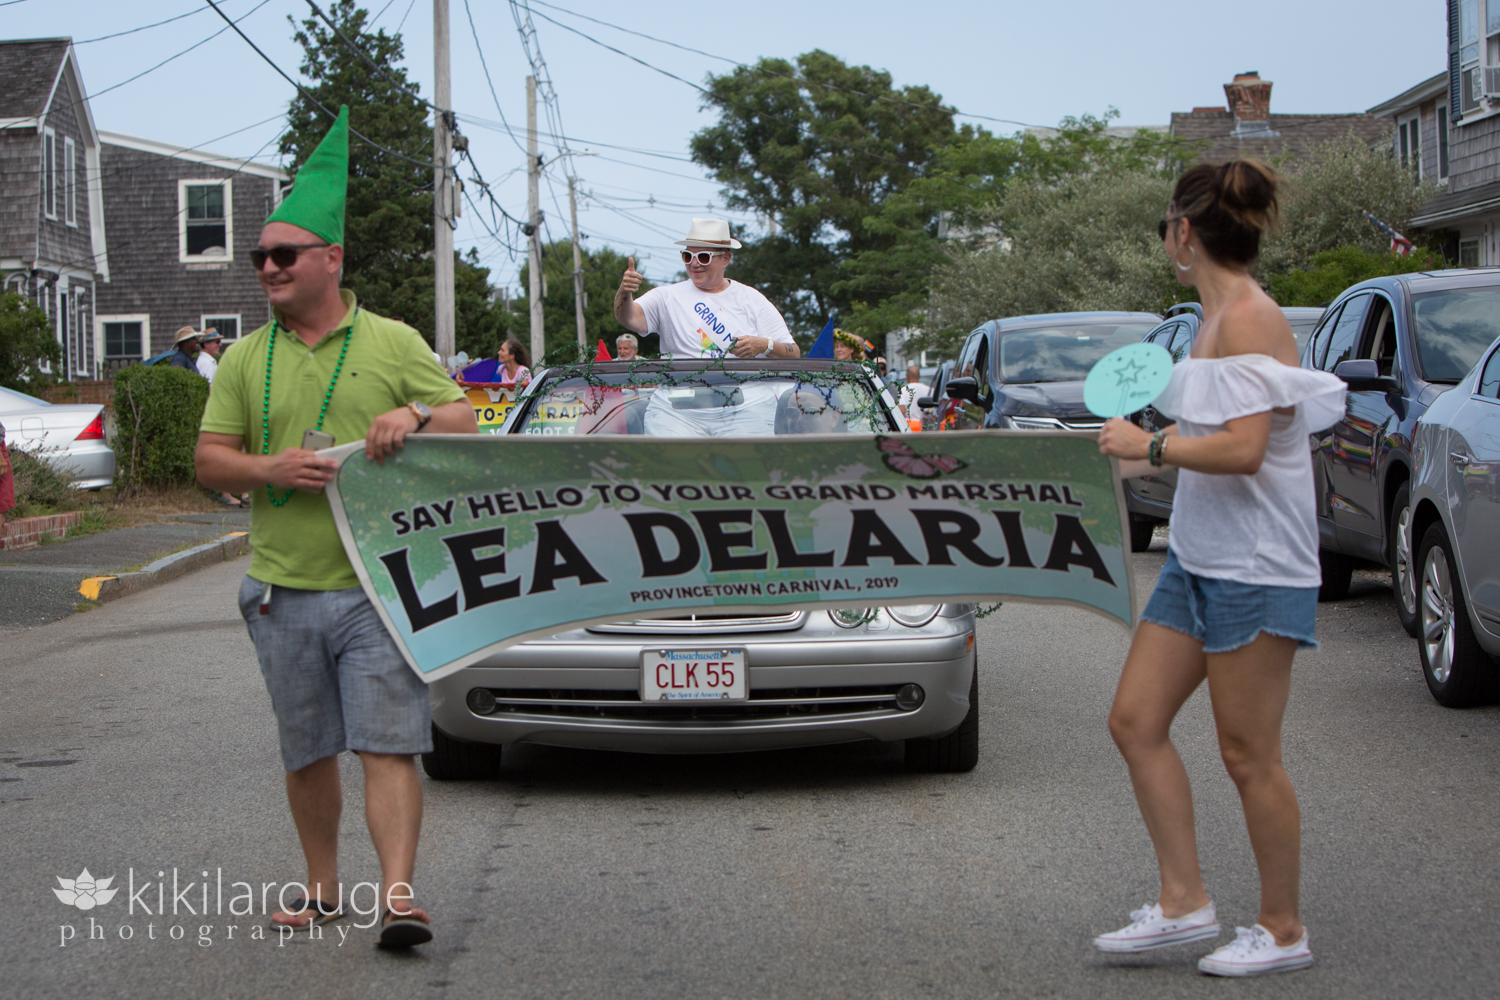 Lea Delaria in convertible in Ptown parade